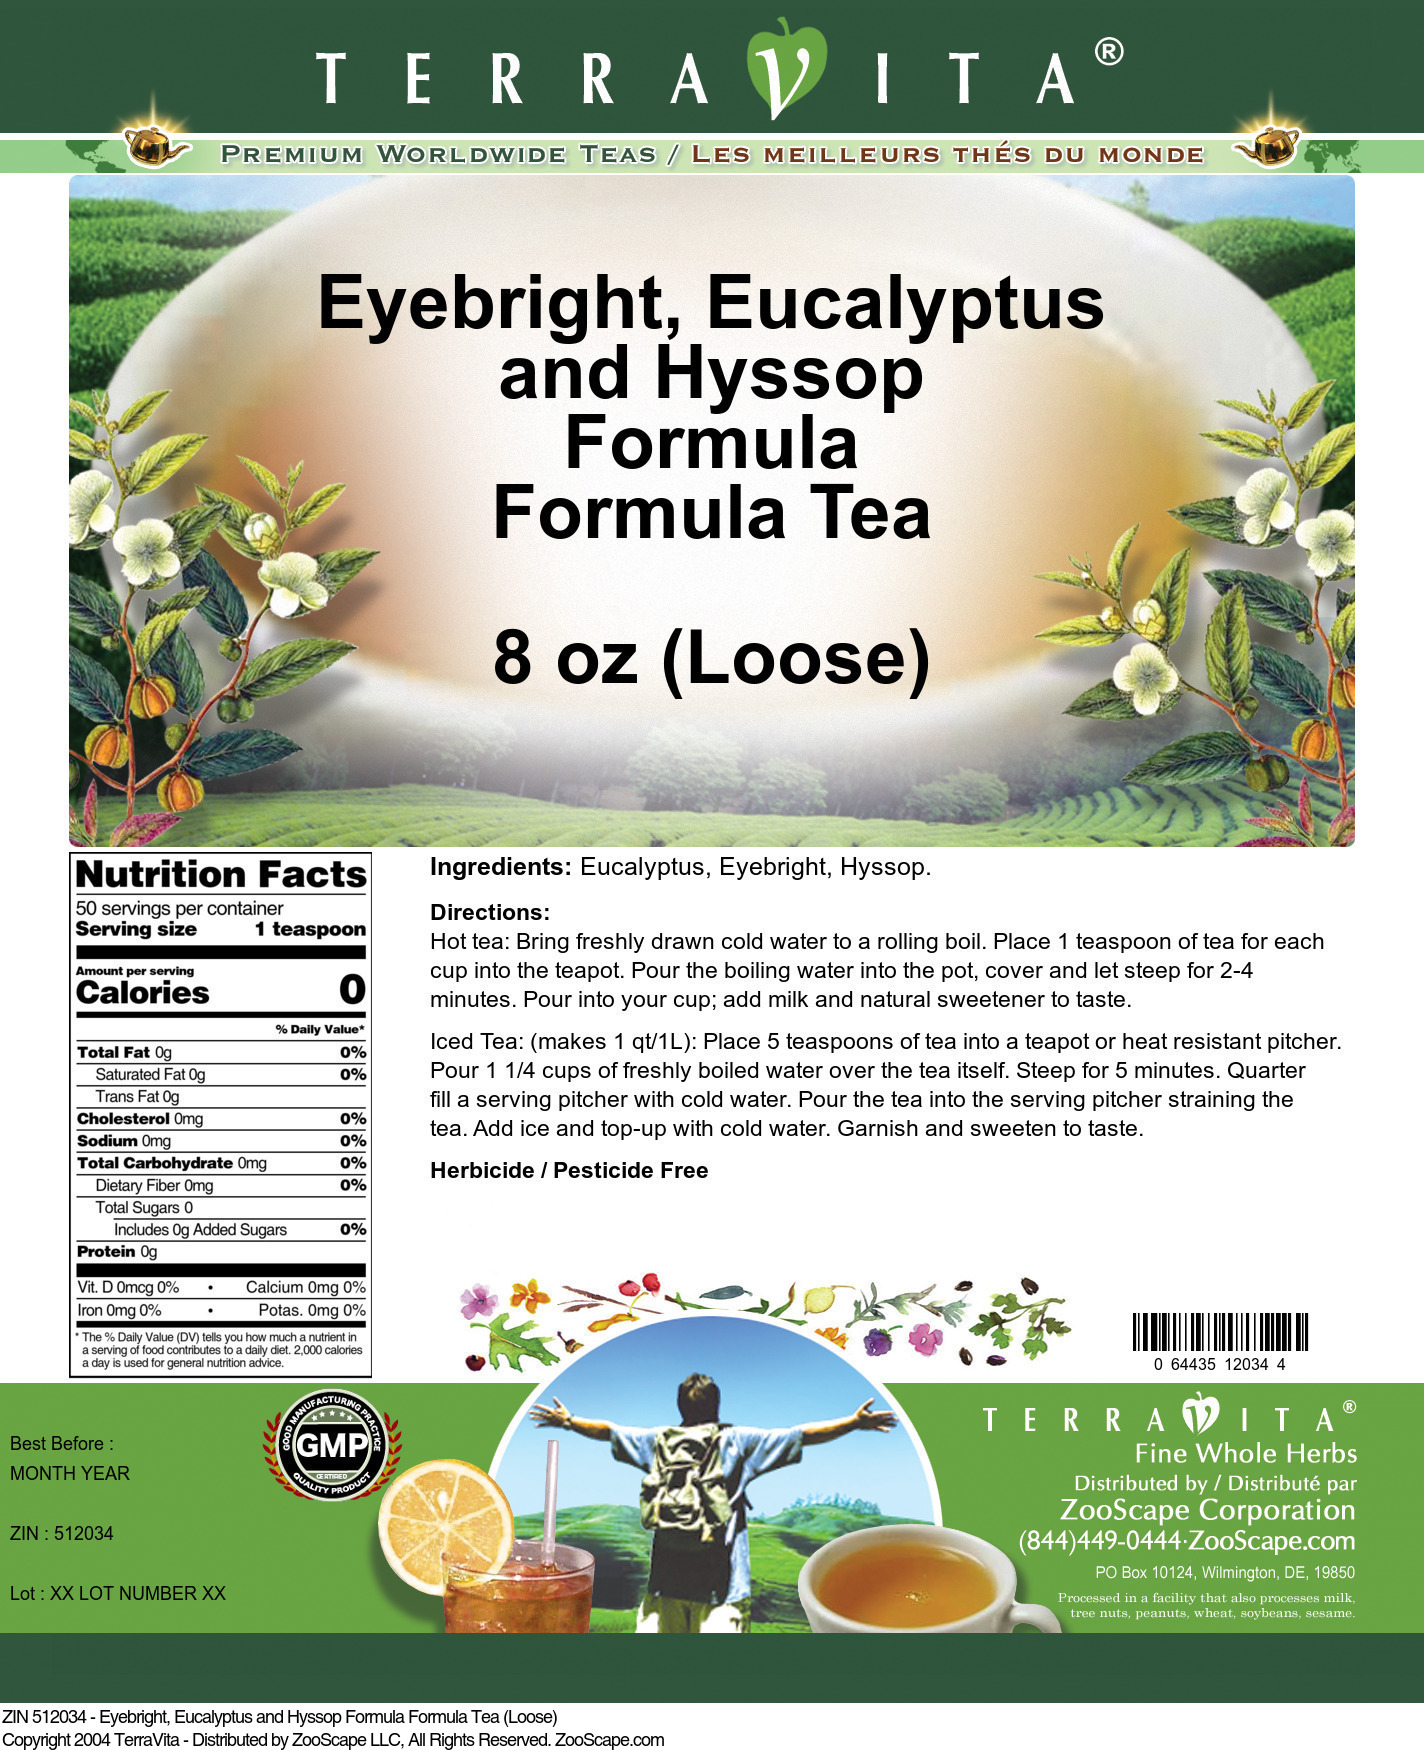 Eyebright, Eucalyptus and Hyssop Formula Formula Tea (Loose) - Label